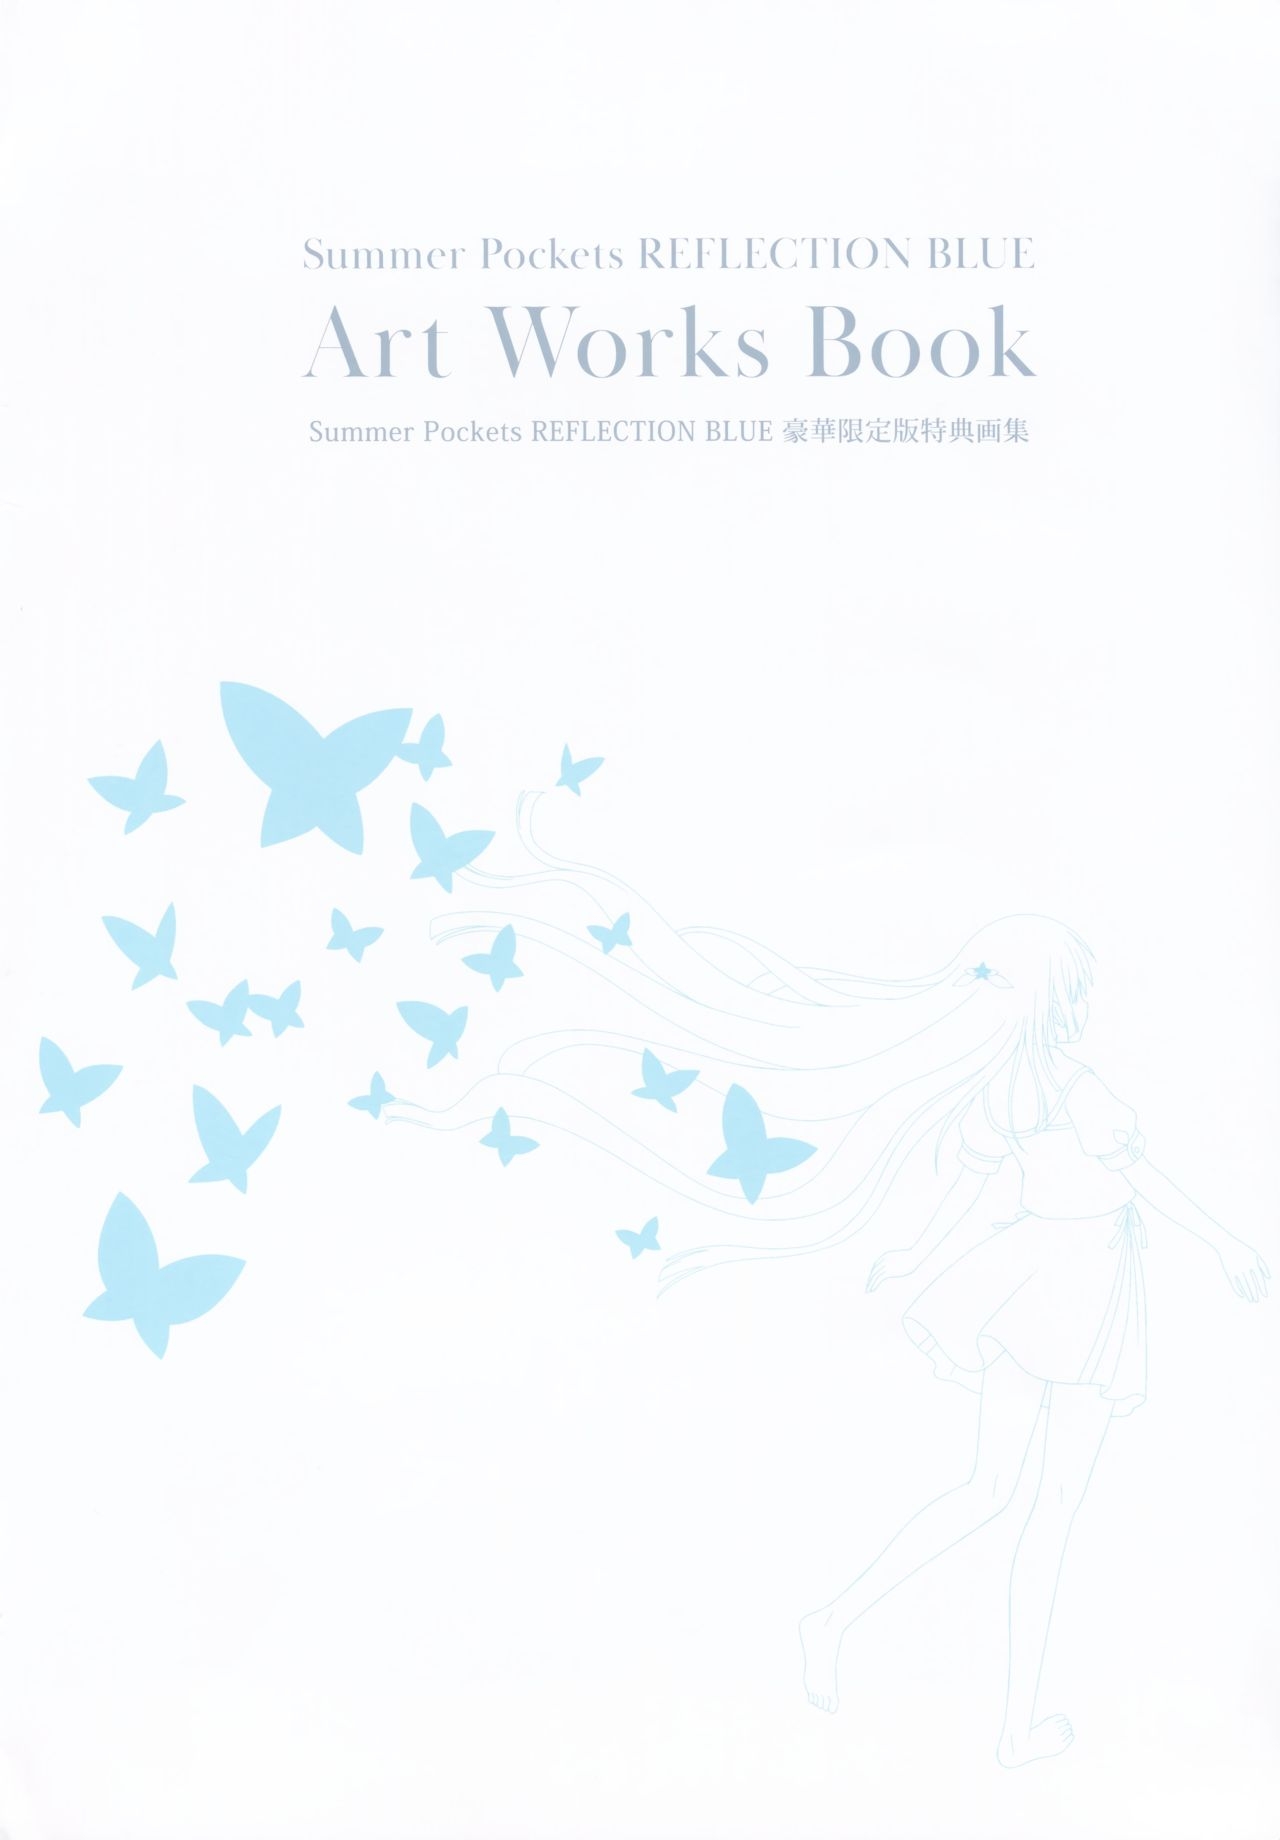 Summer Pockets REFLECTION BLUE Art Works Book 1